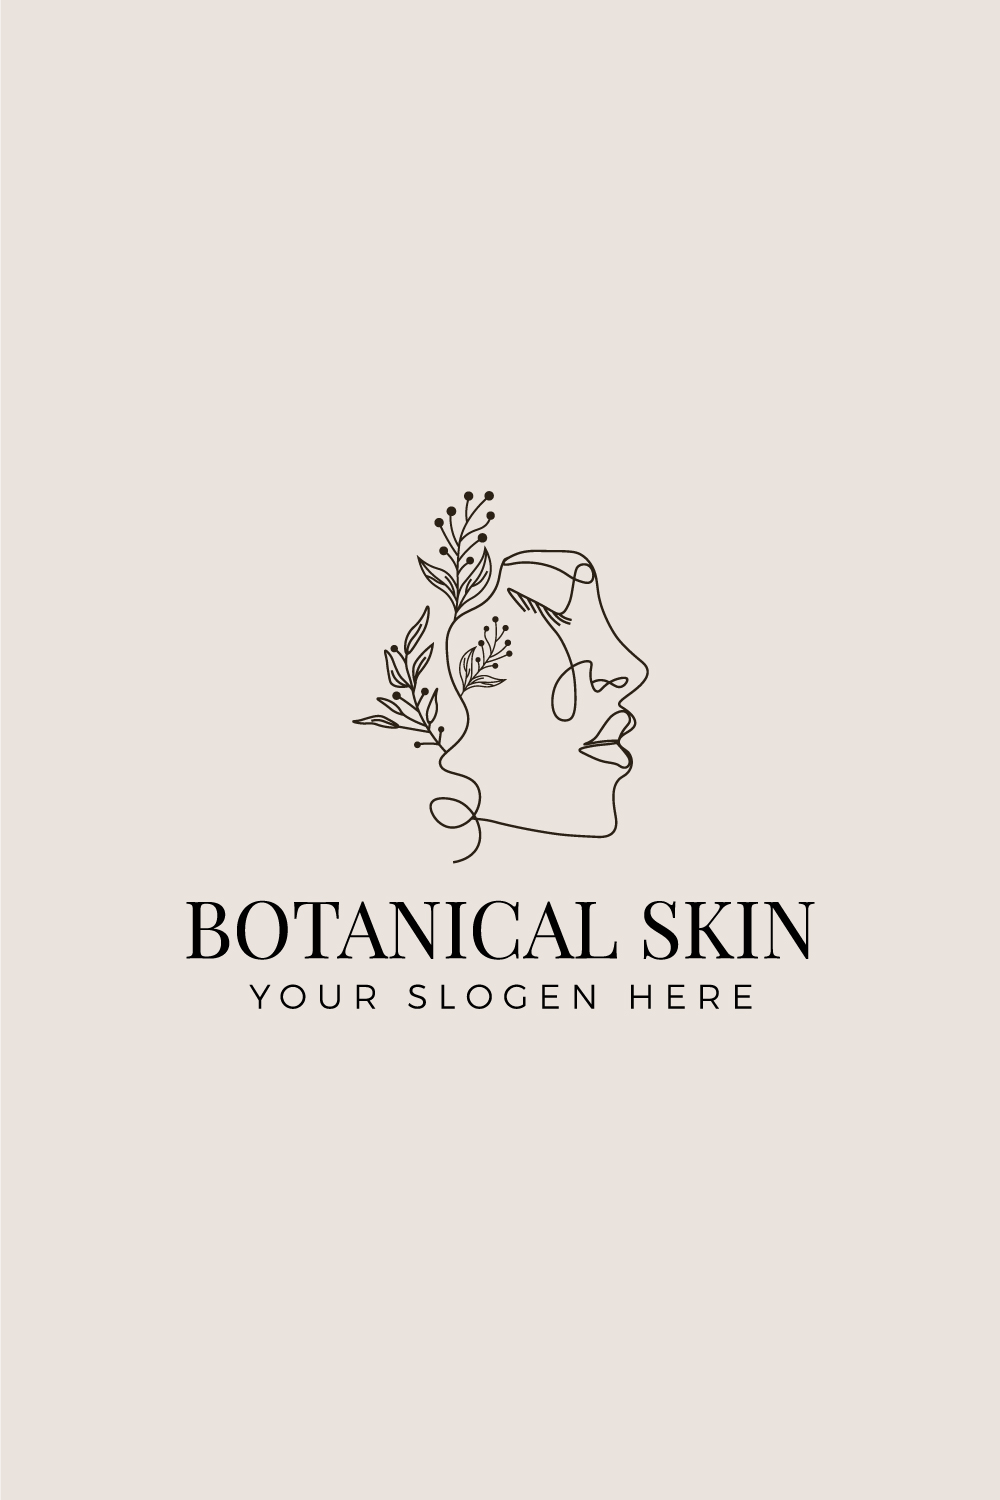 Botanical skin care logo | Hand drawn Line art logo pinterest preview image.